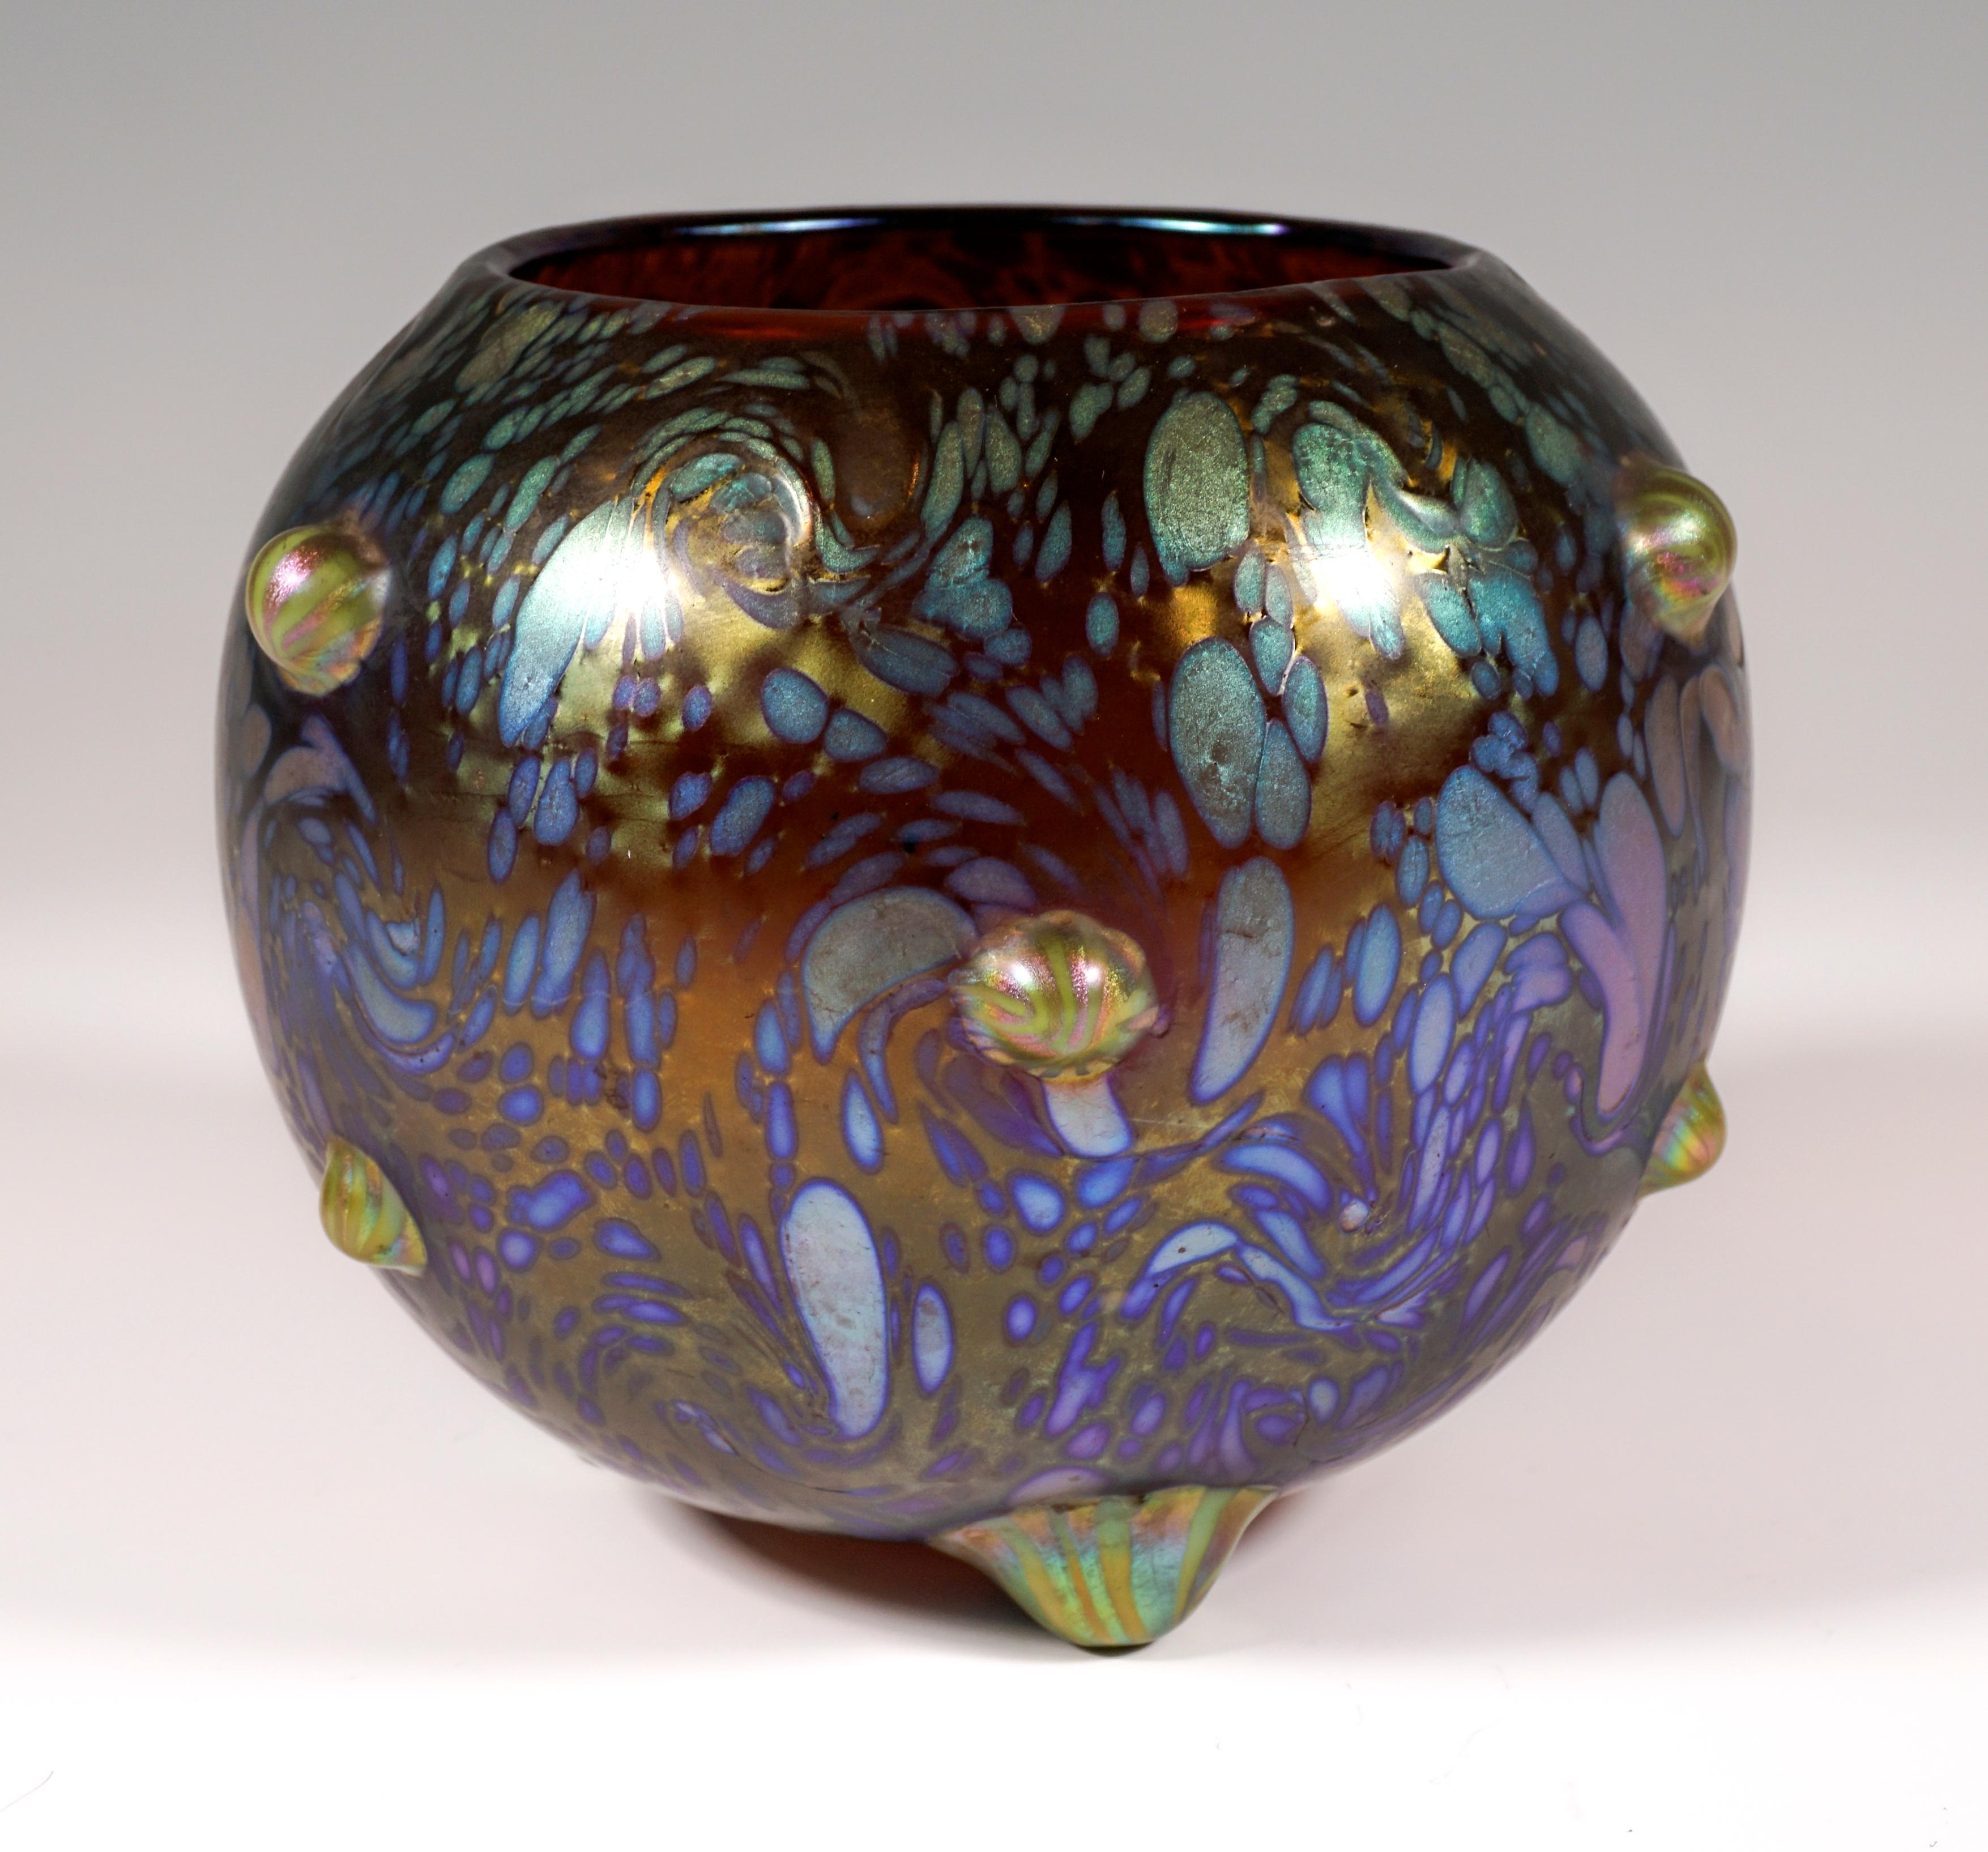 Early 20th Century Loetz Art Nouveau Spherical Vase Phenomenon Genre 7766, Austria, circa 1904